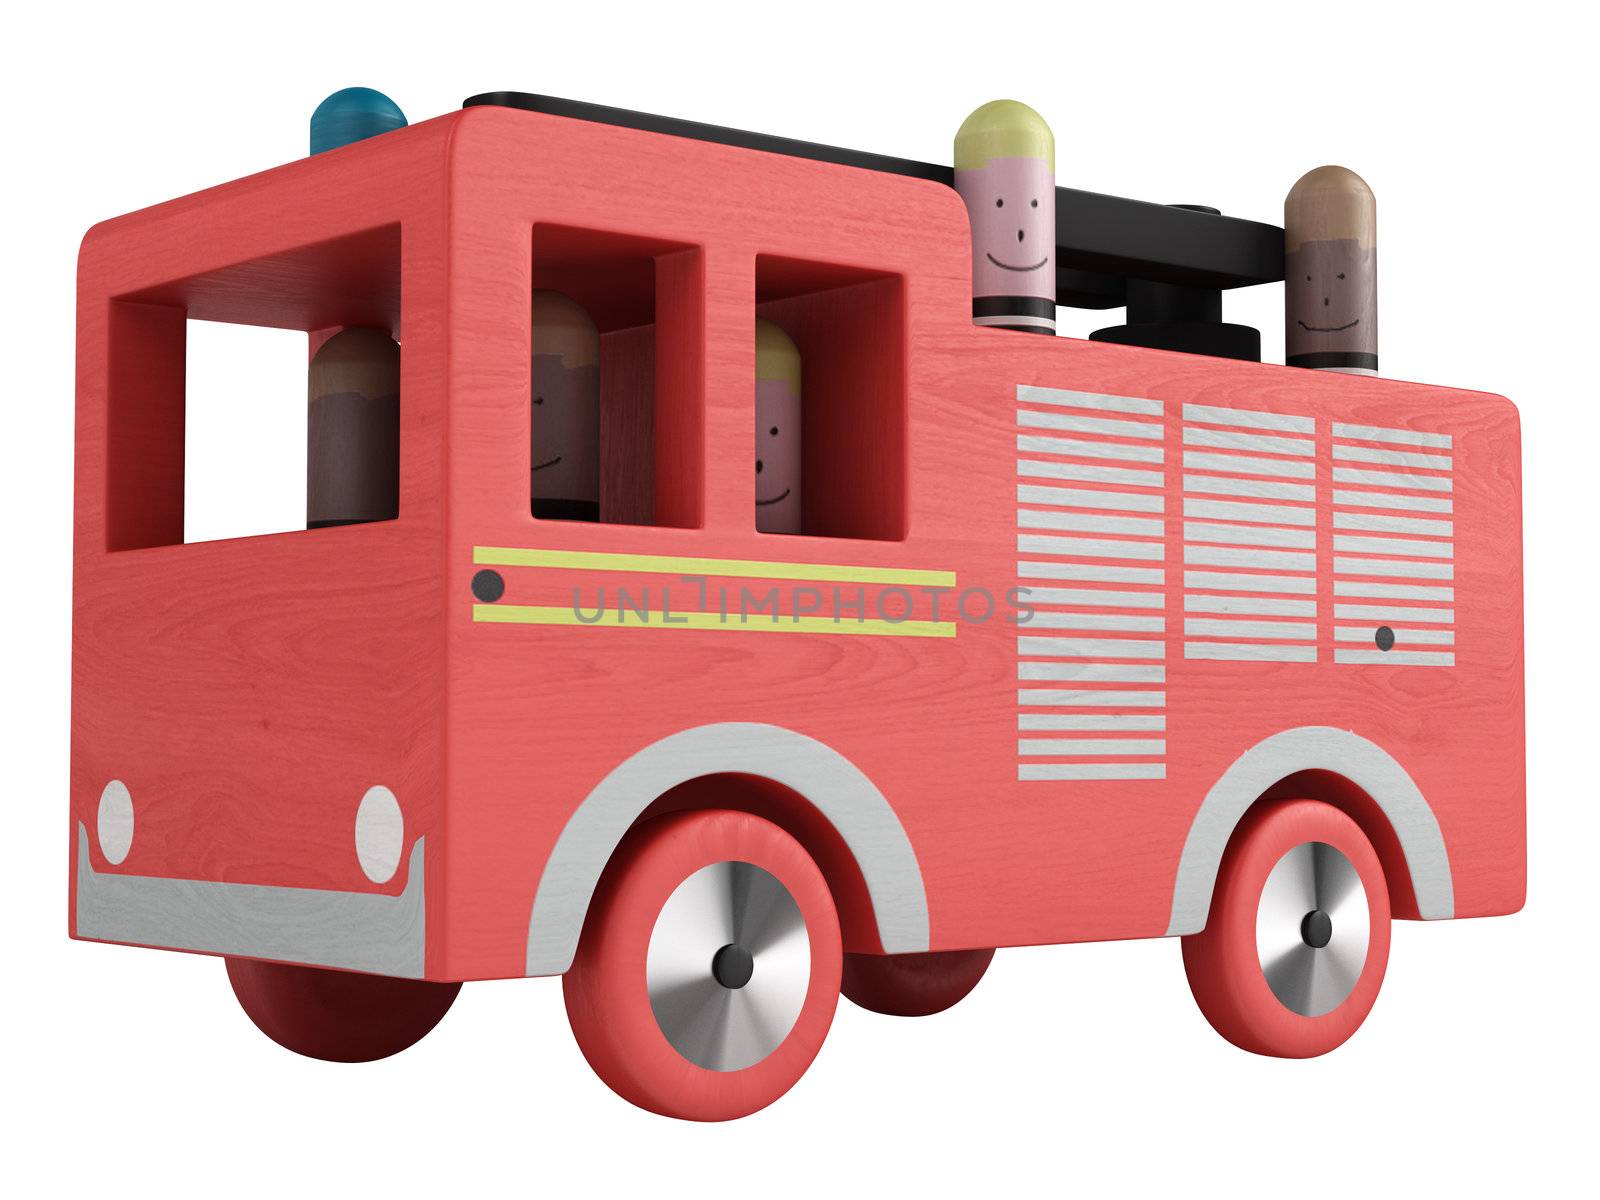 Fire truck toy by AlexanderMorozov